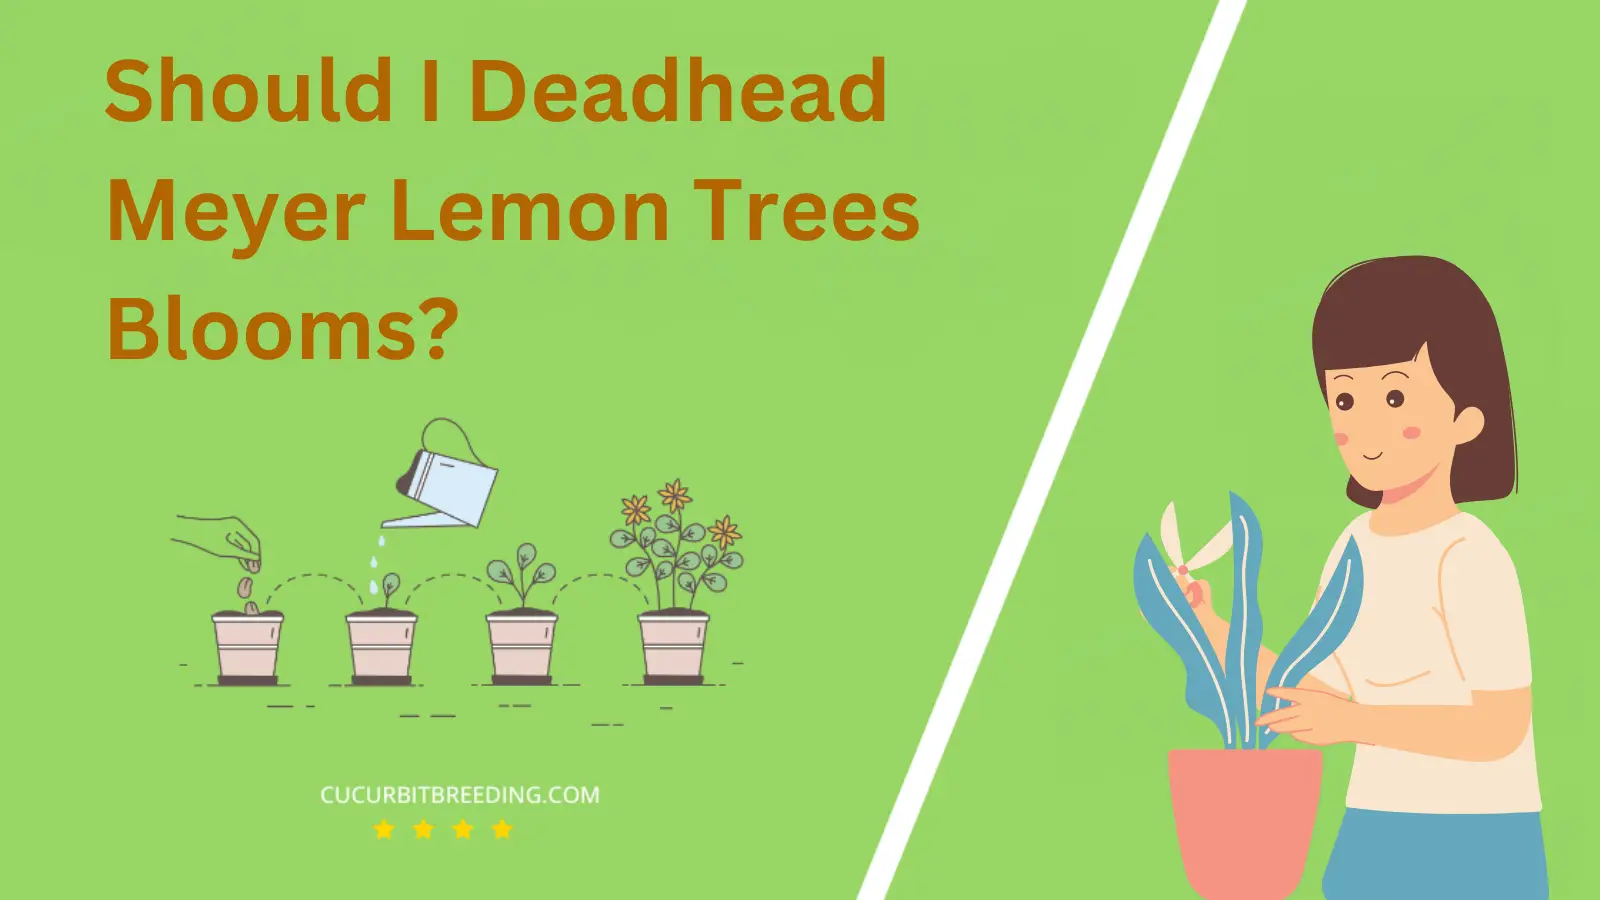 Should I Deadhead Meyer Lemon Trees Blooms?